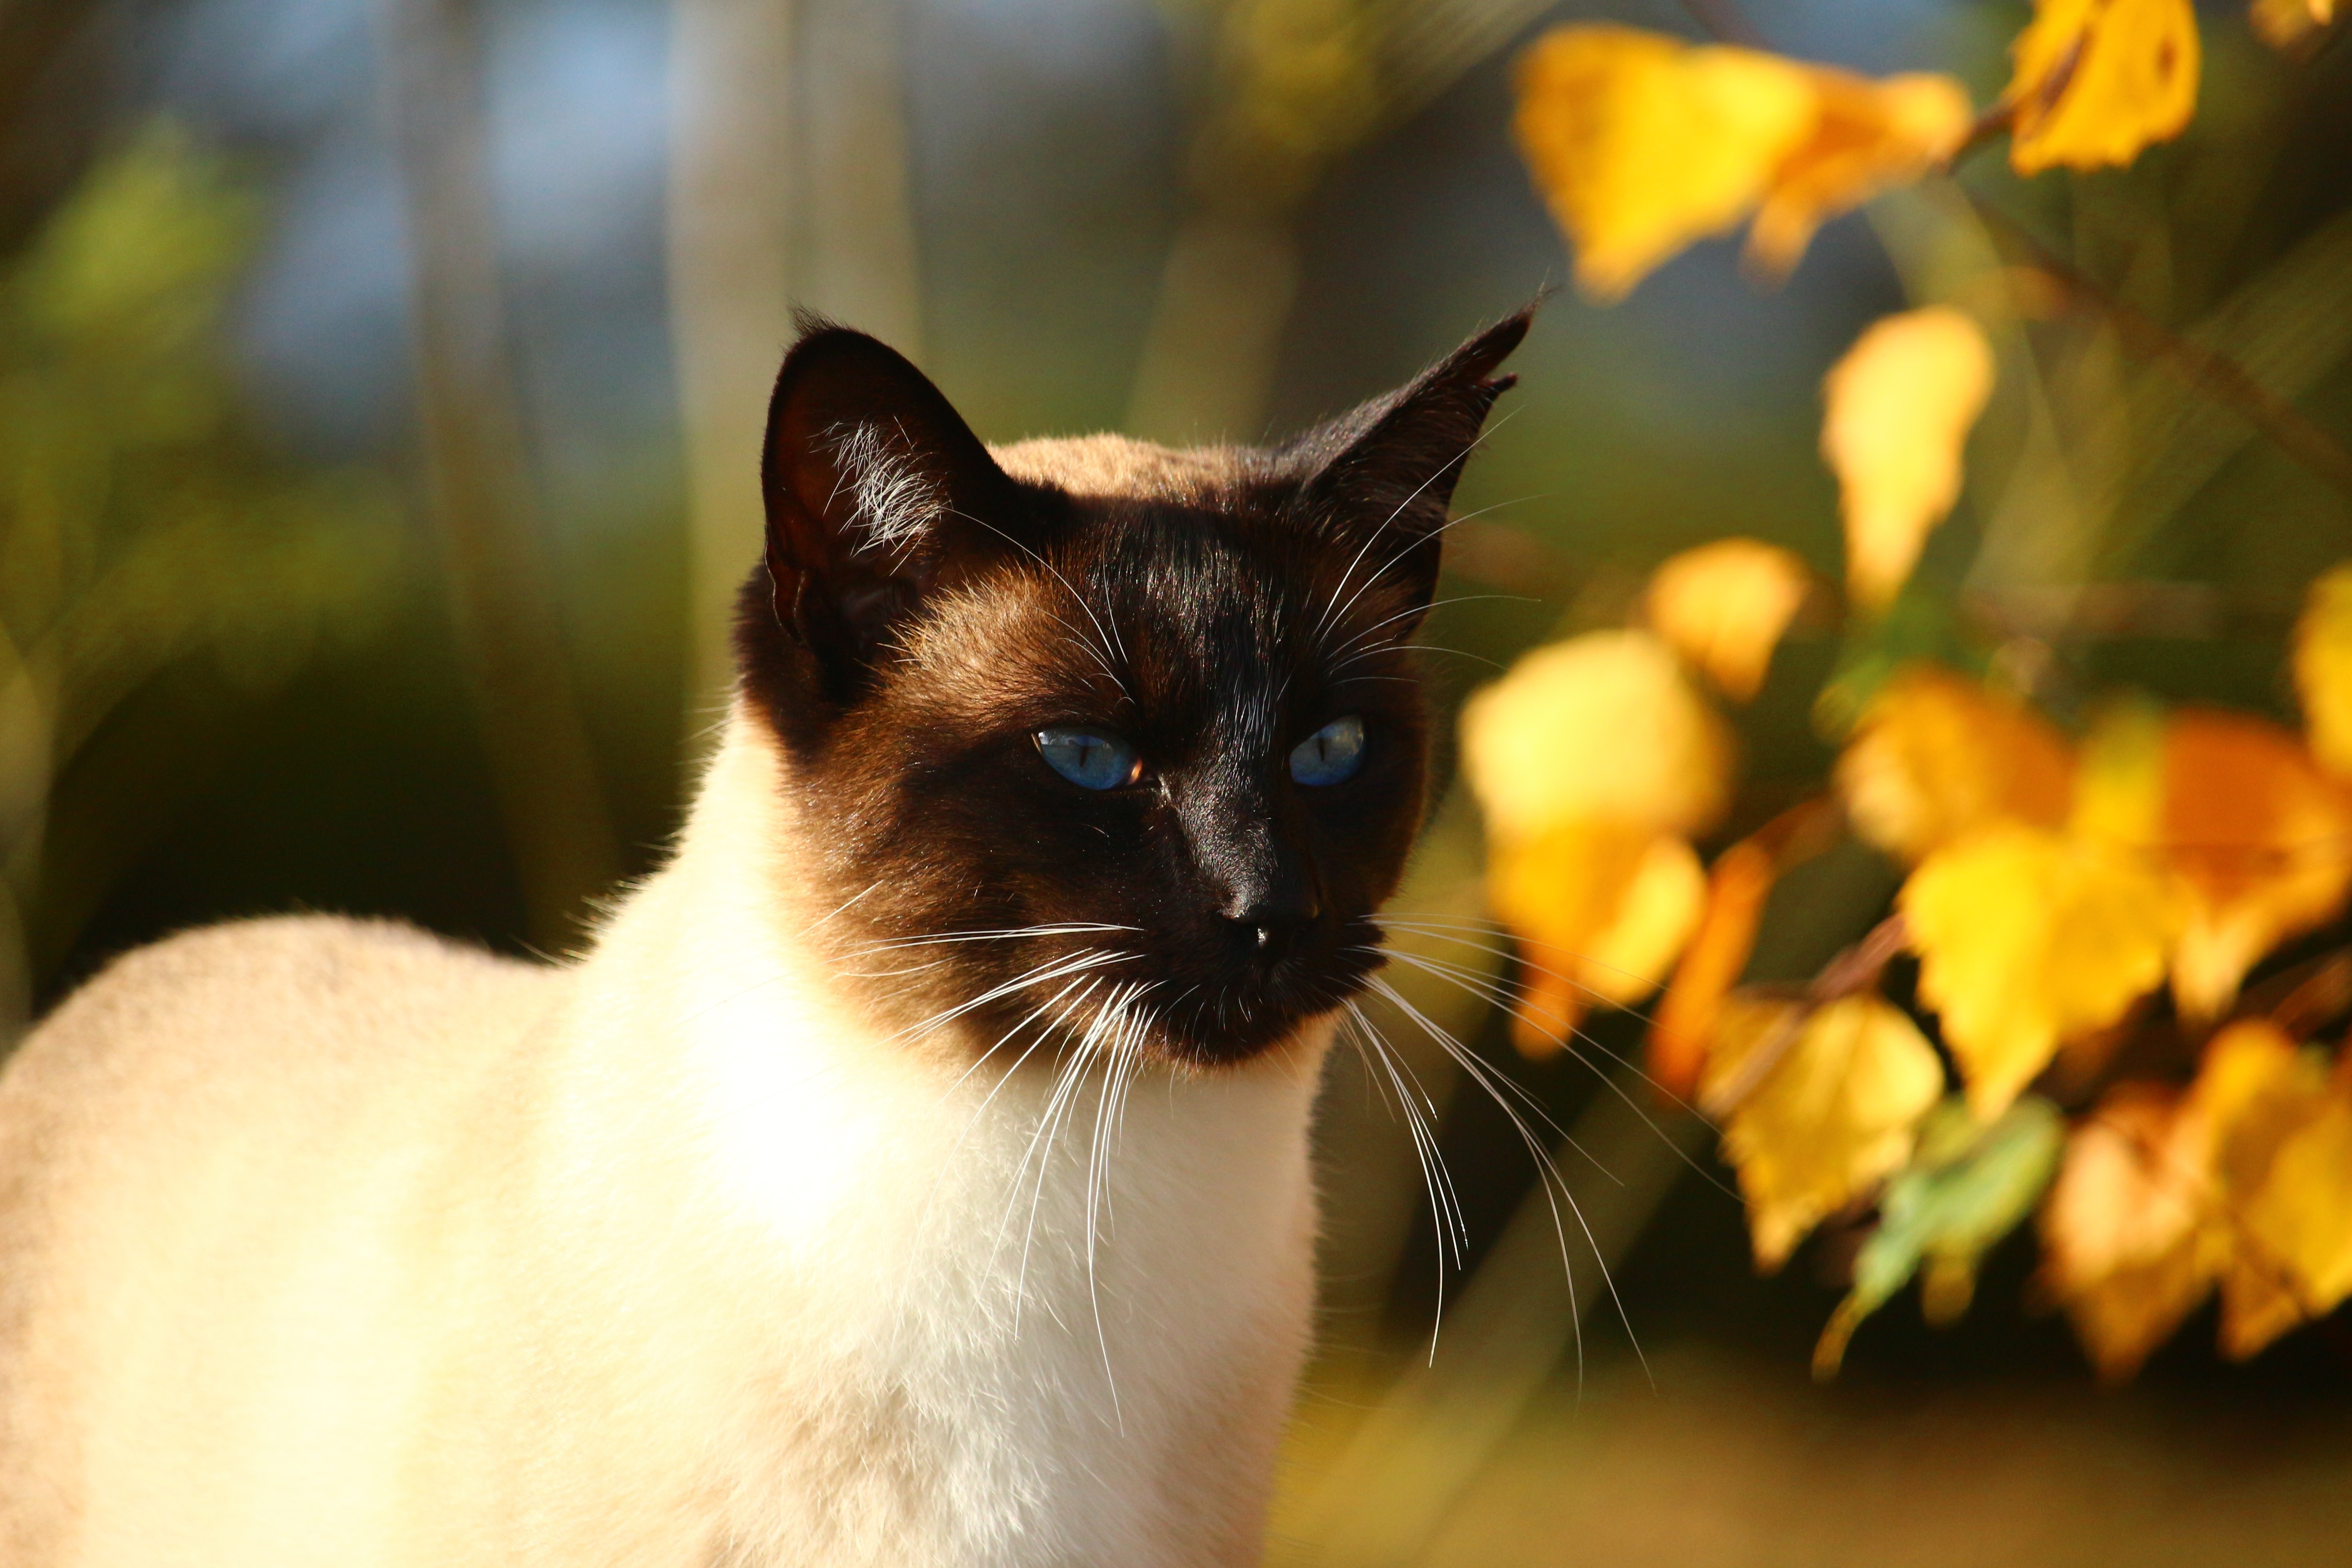 black and white short fur cat on closeup photograph